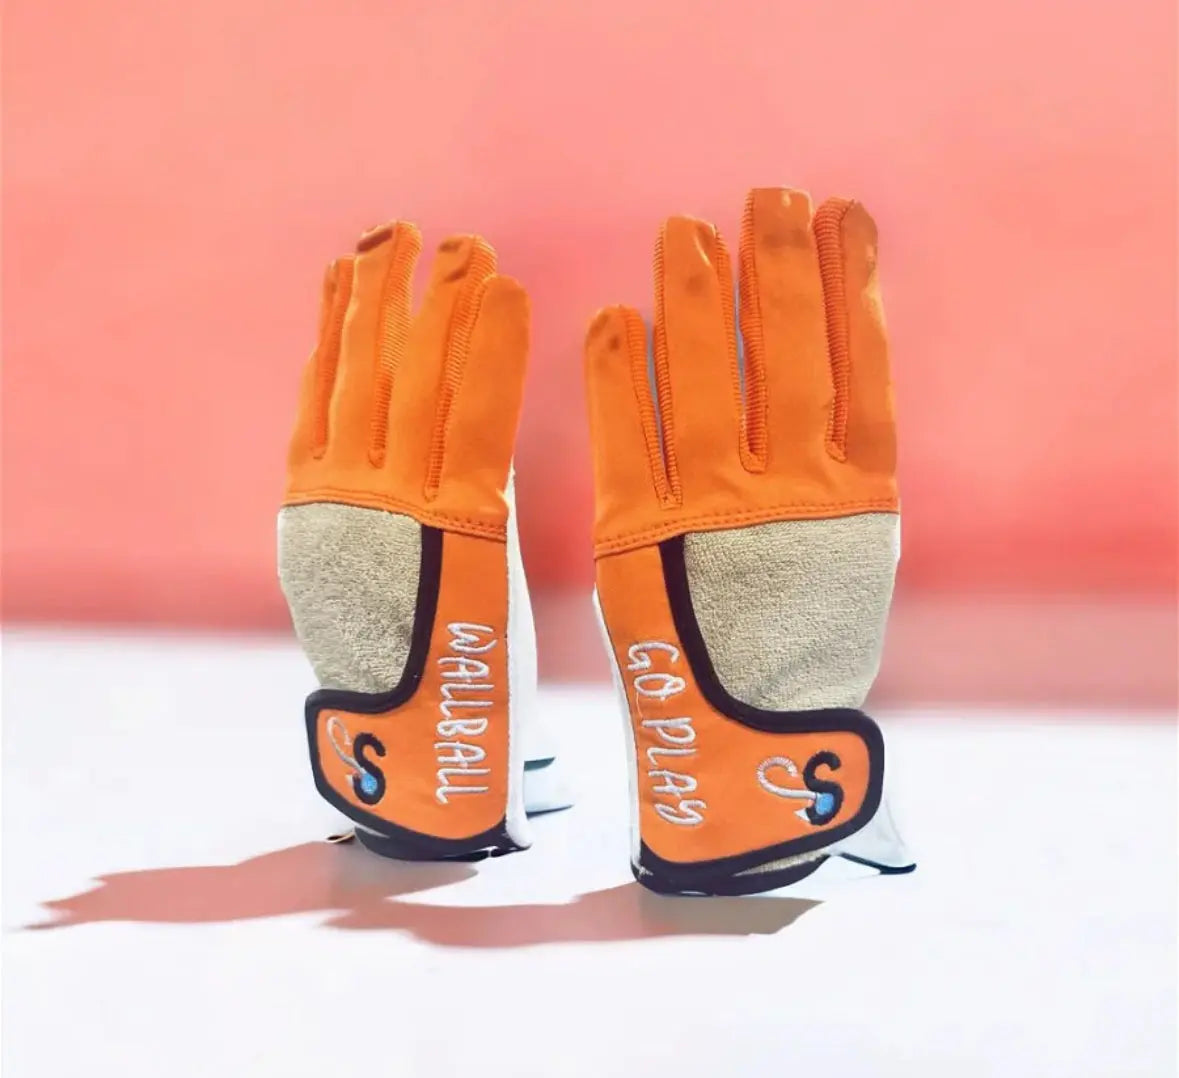 KOTC Pro Orange Gloves Unpadded Palms New York Handball ™️